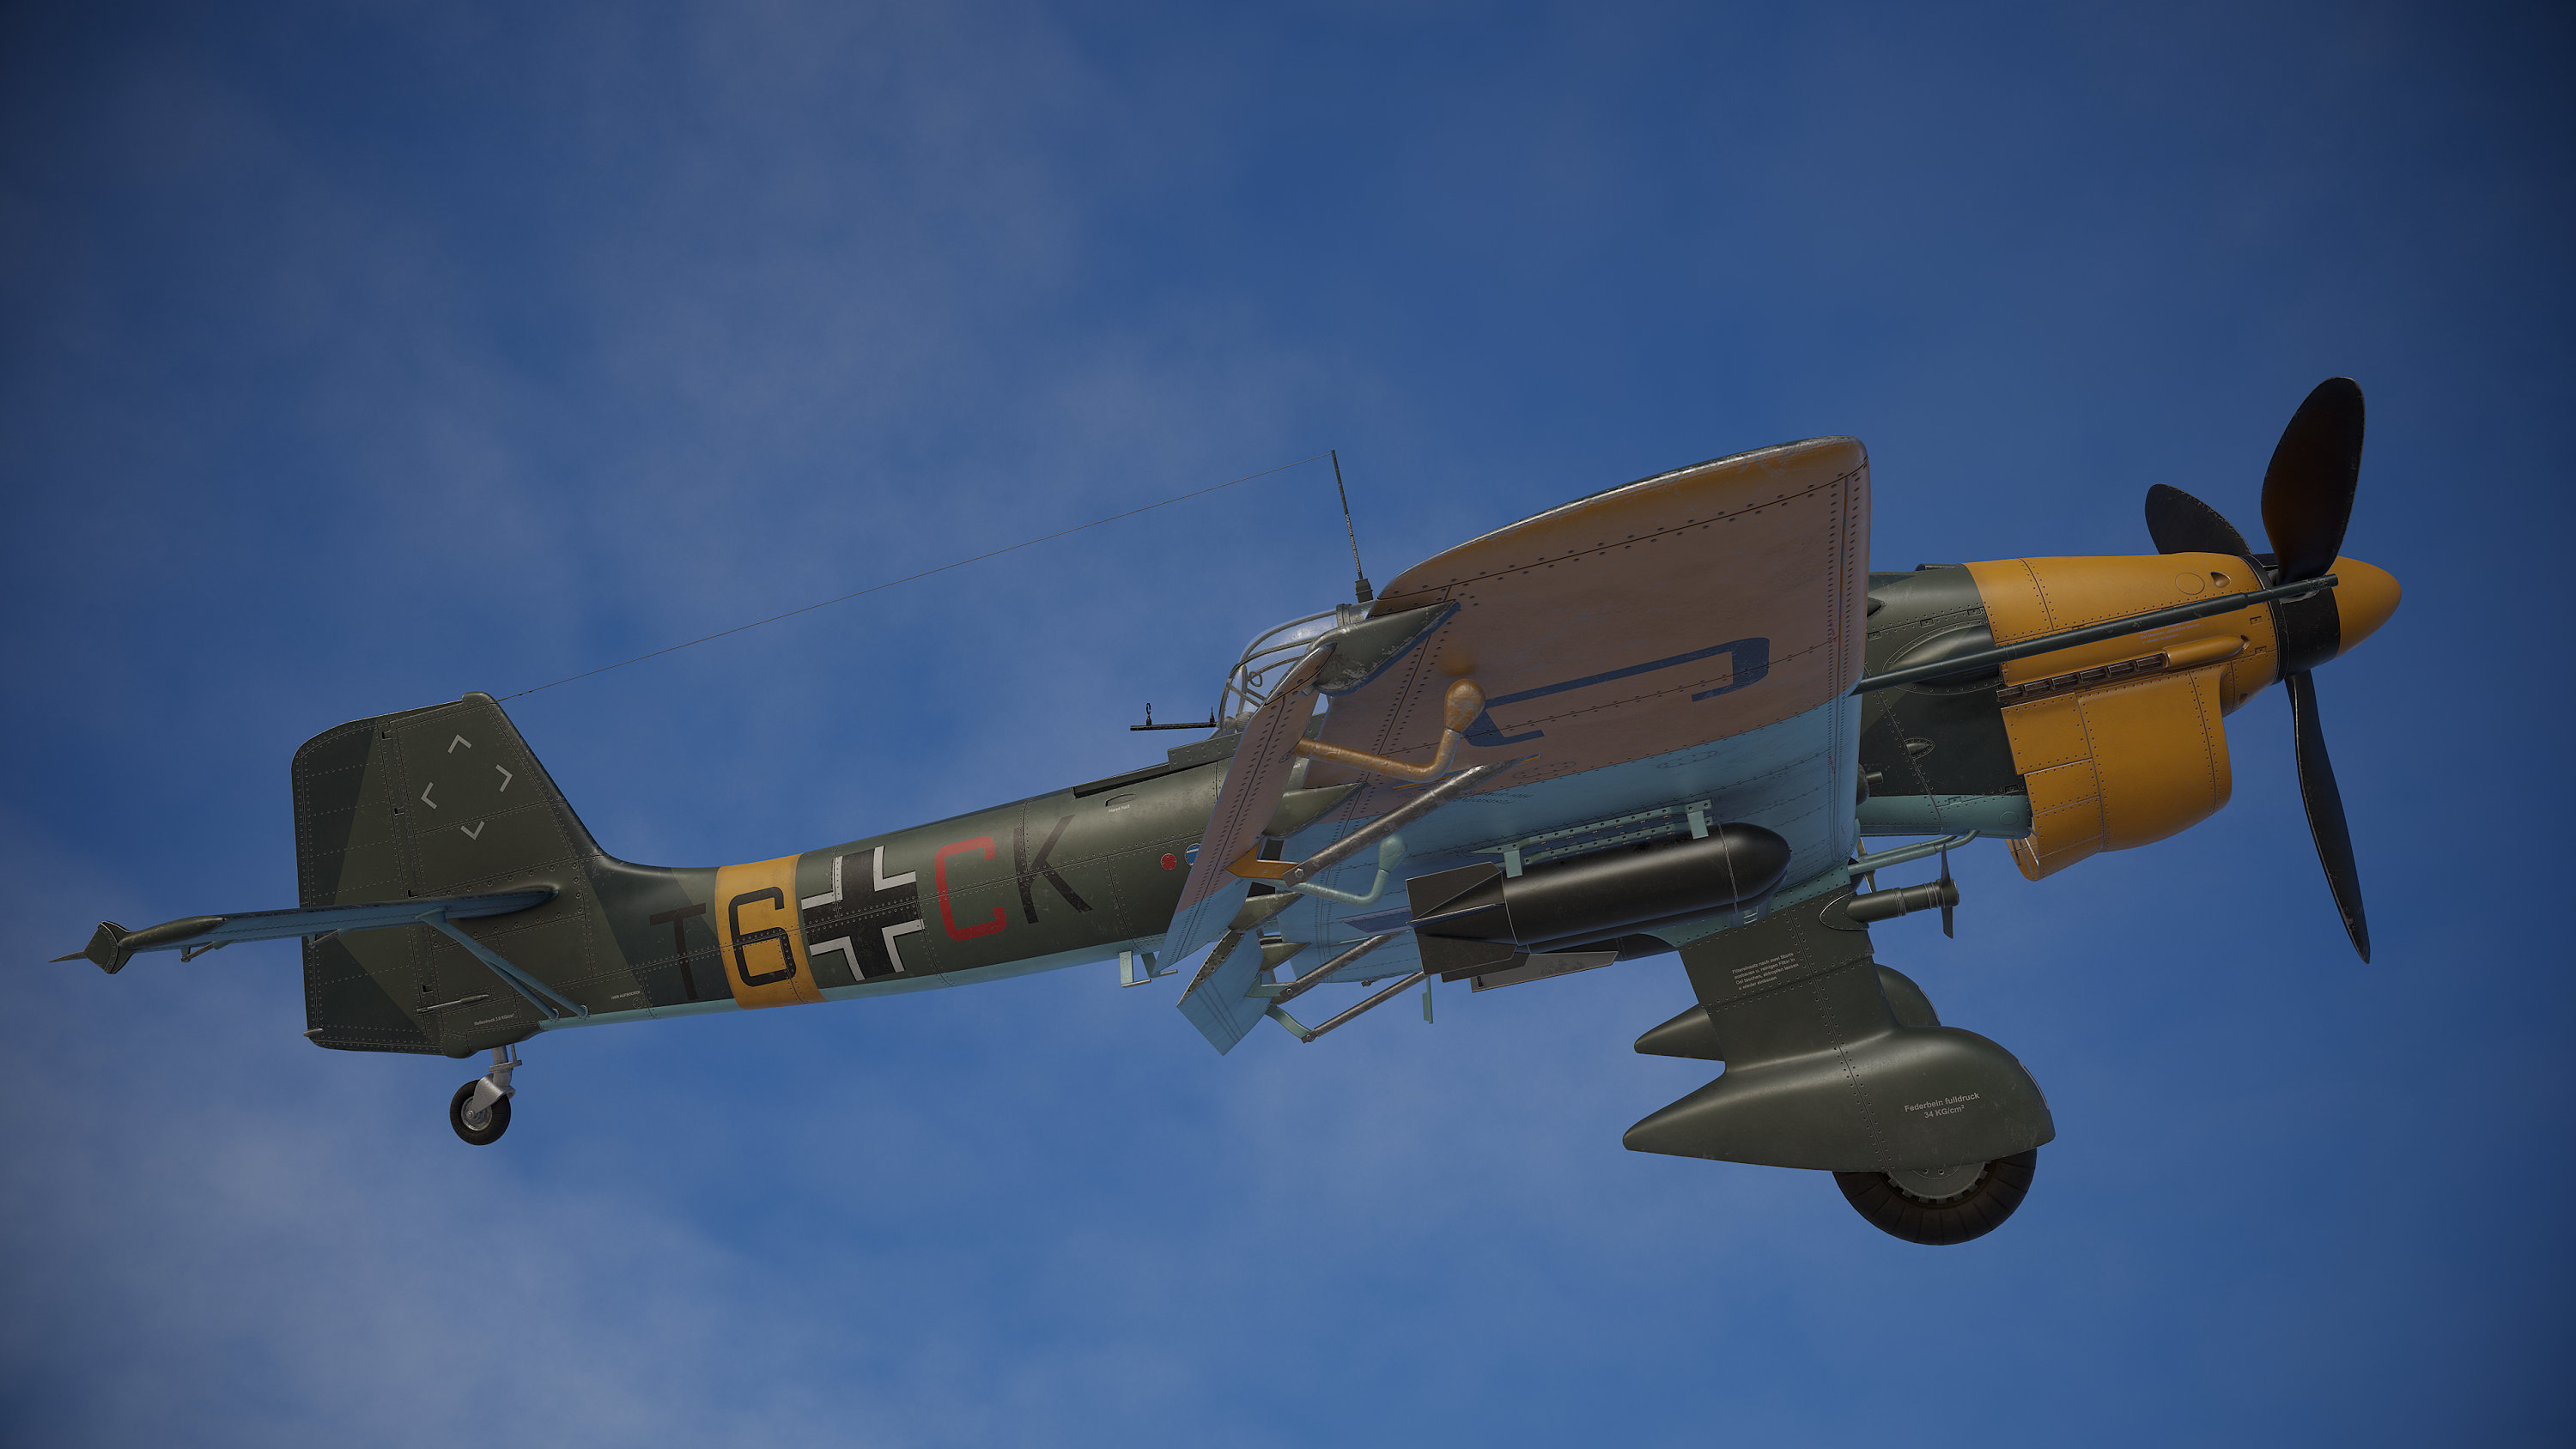 ju87 斯图卡b2型 俯冲轰炸机